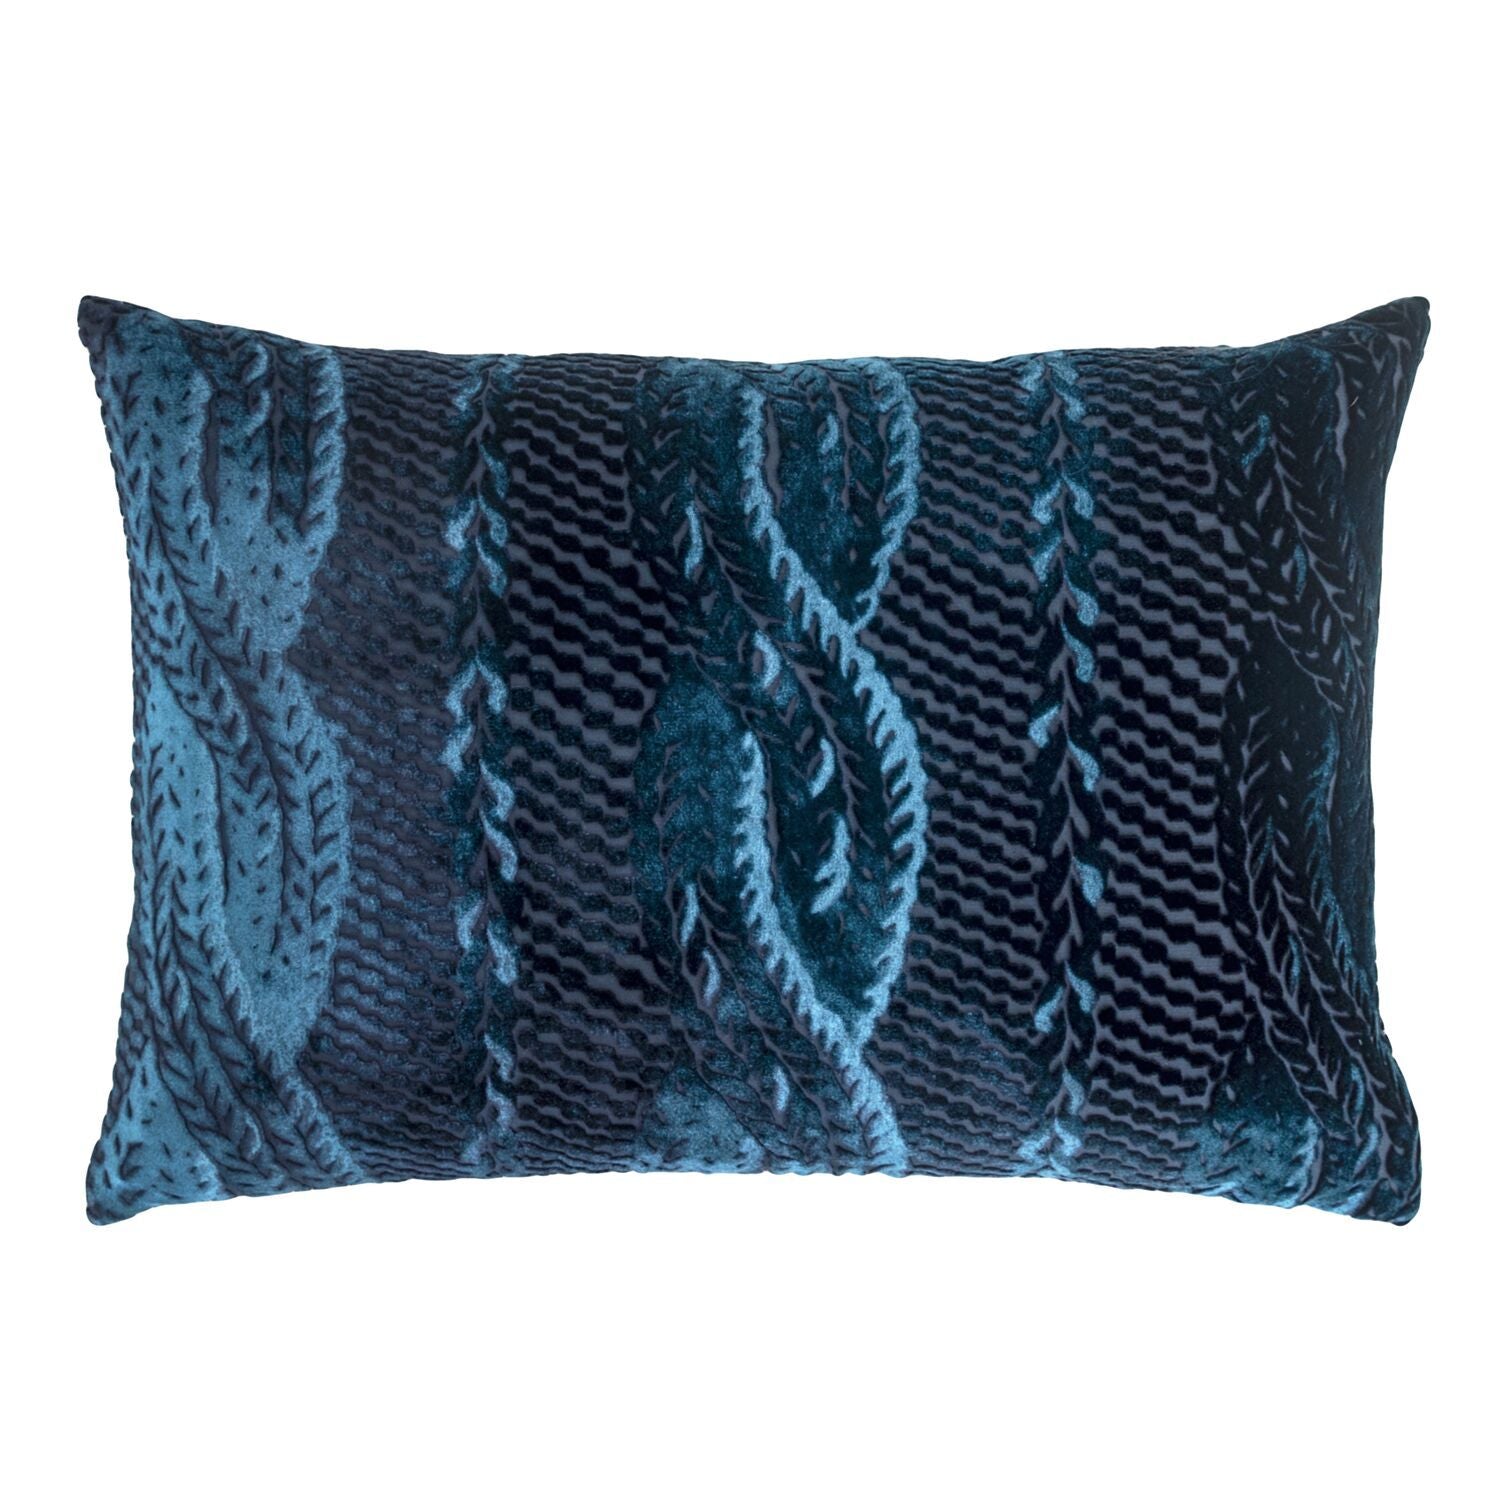 Cobalt Black Cable Knit Pillow by Kevin O'Brien Studio